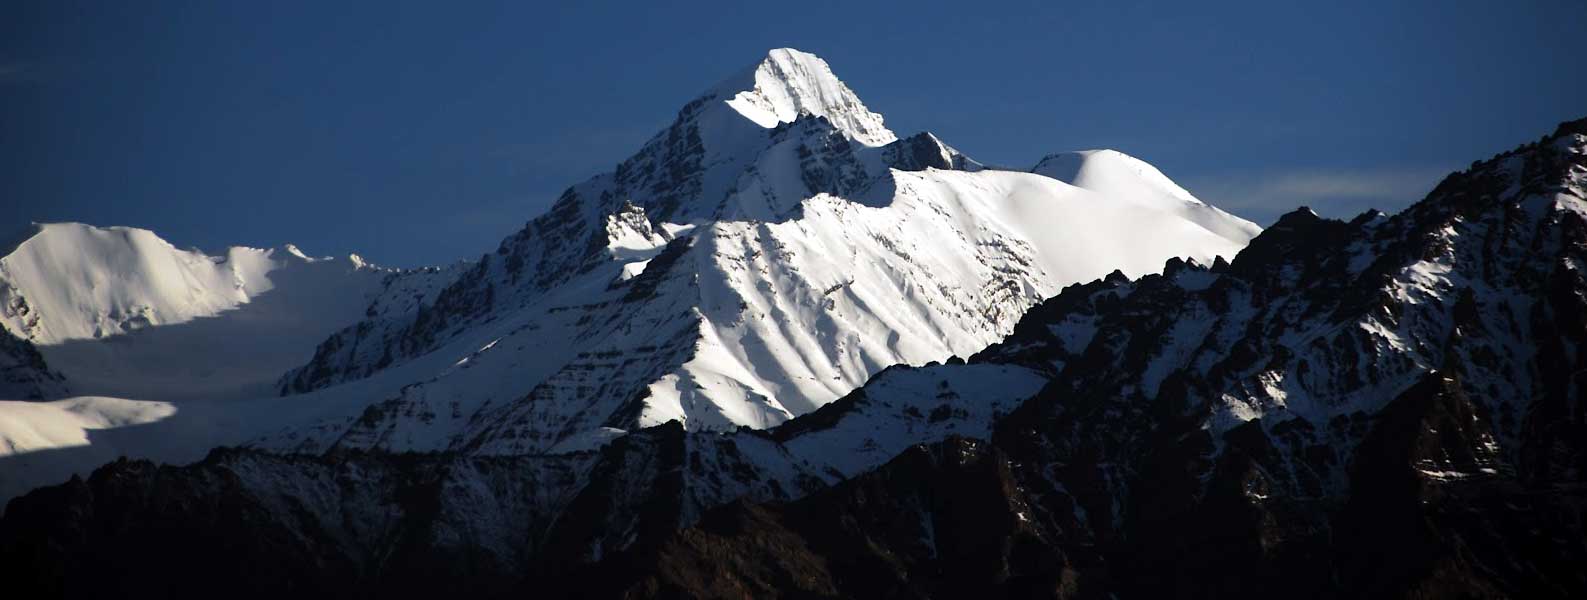 Stok Kangri  Expedition, Shimla, Himachal Pradesh, India